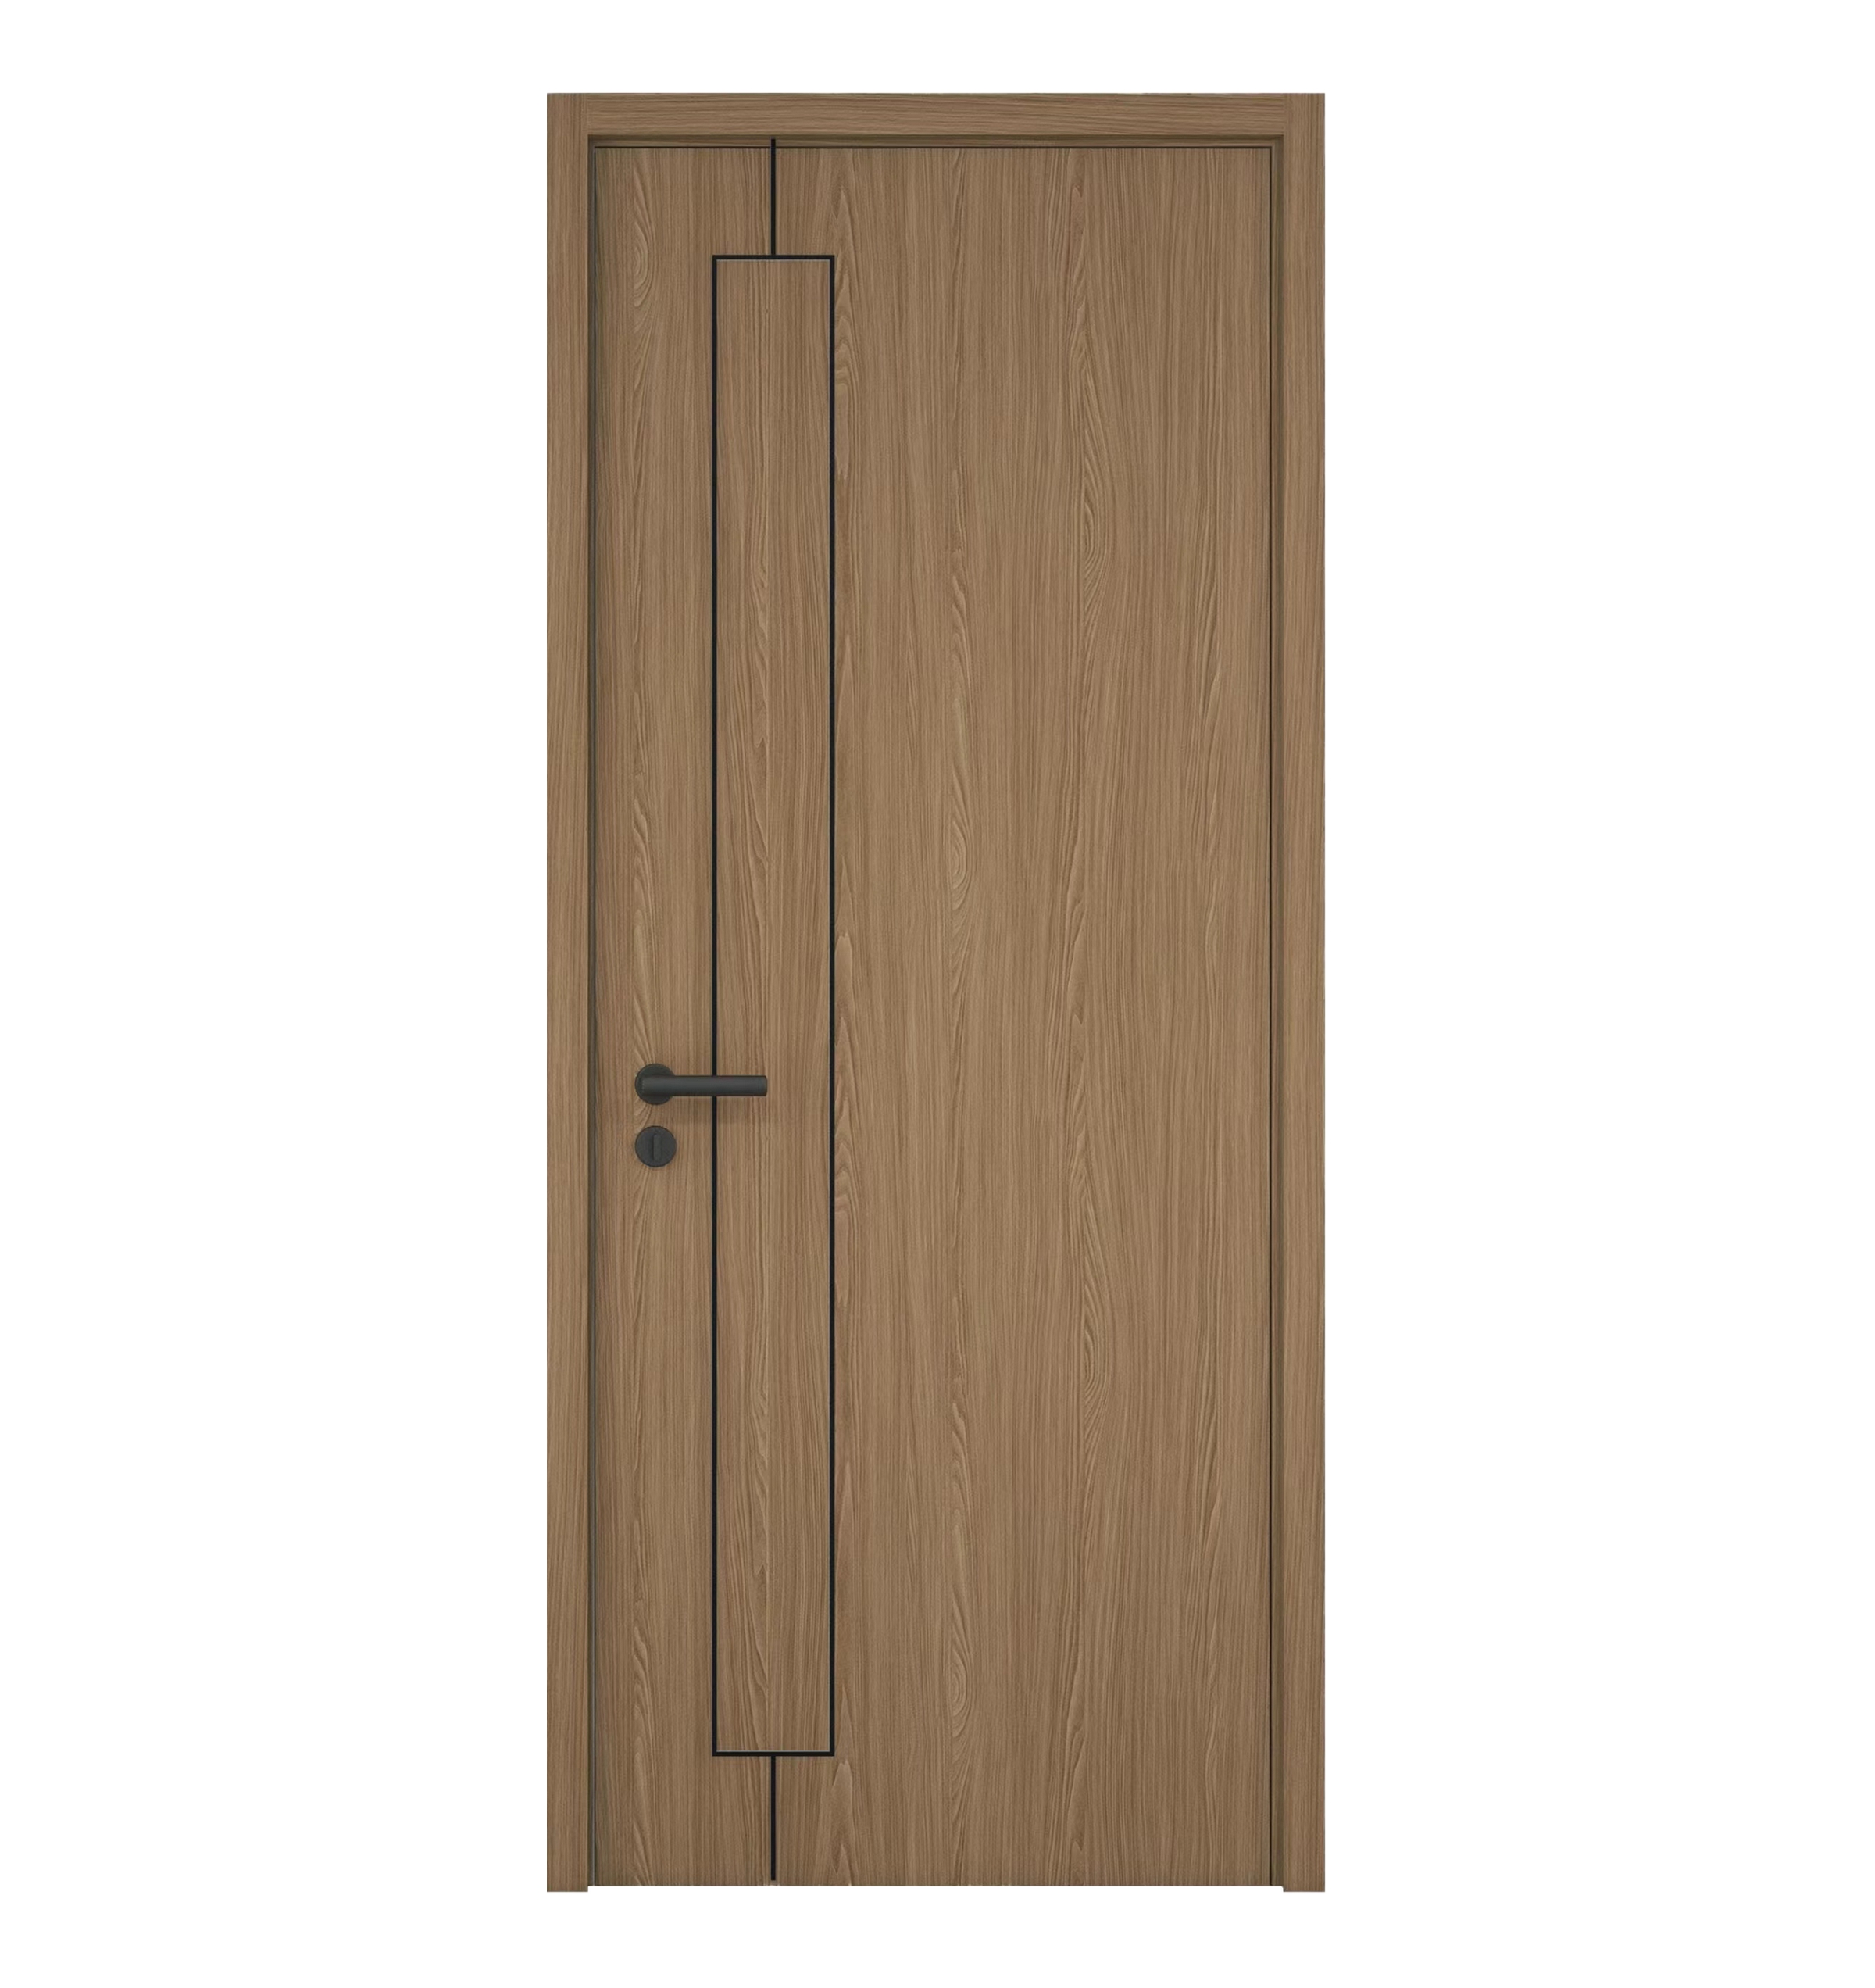 Custom High Quality Wood Fire Door for Hotel Room Fireproof Hotel Room Door Fire Rated Hotel Door